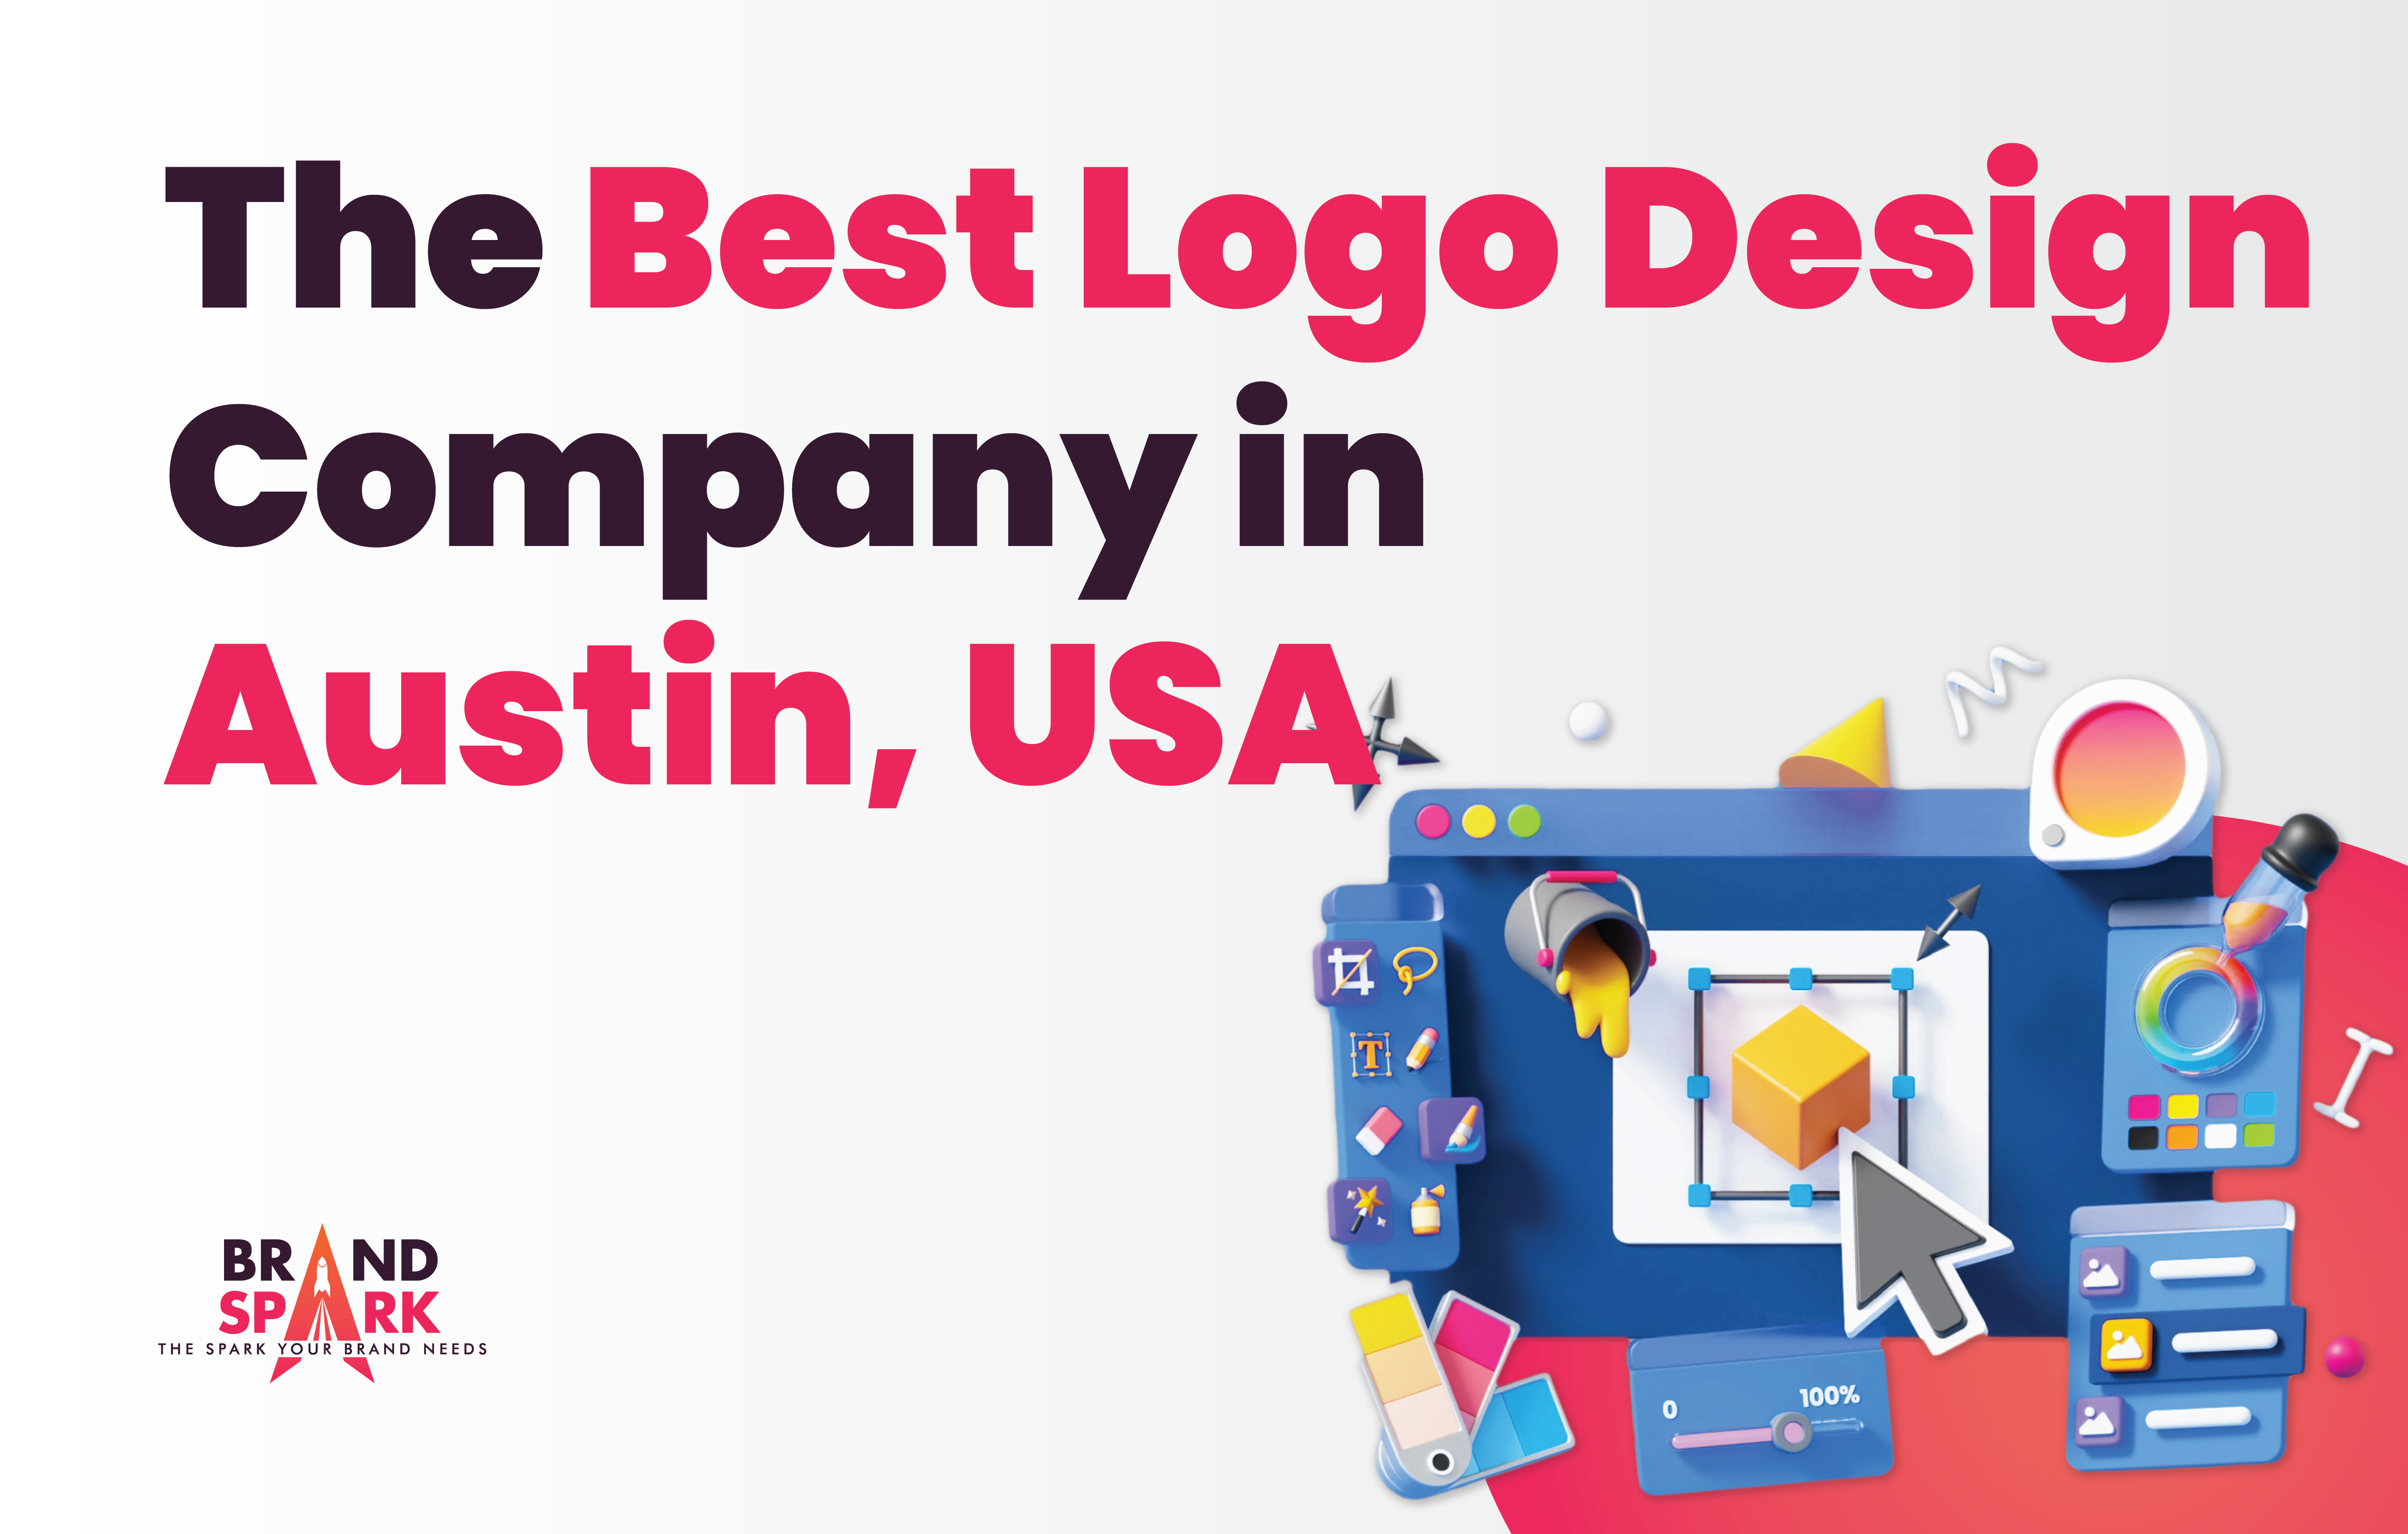 The Best Logo Design Company in Austin, USA